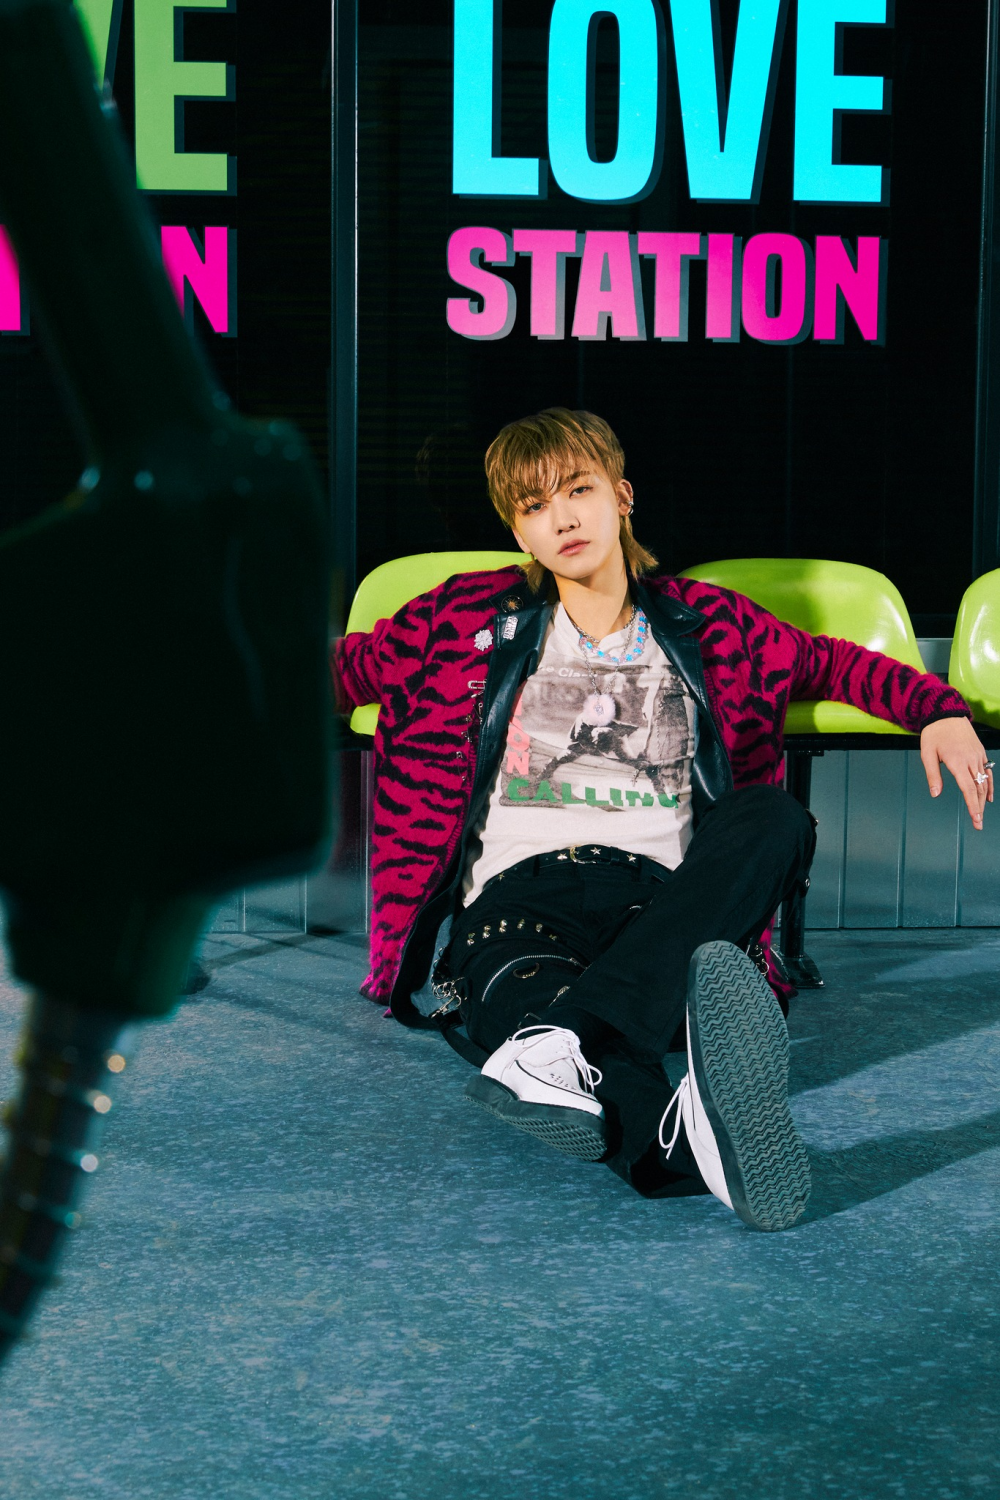 [Камбэк] NCT Dream альбом «Glitch Mode»: музыкальный клип